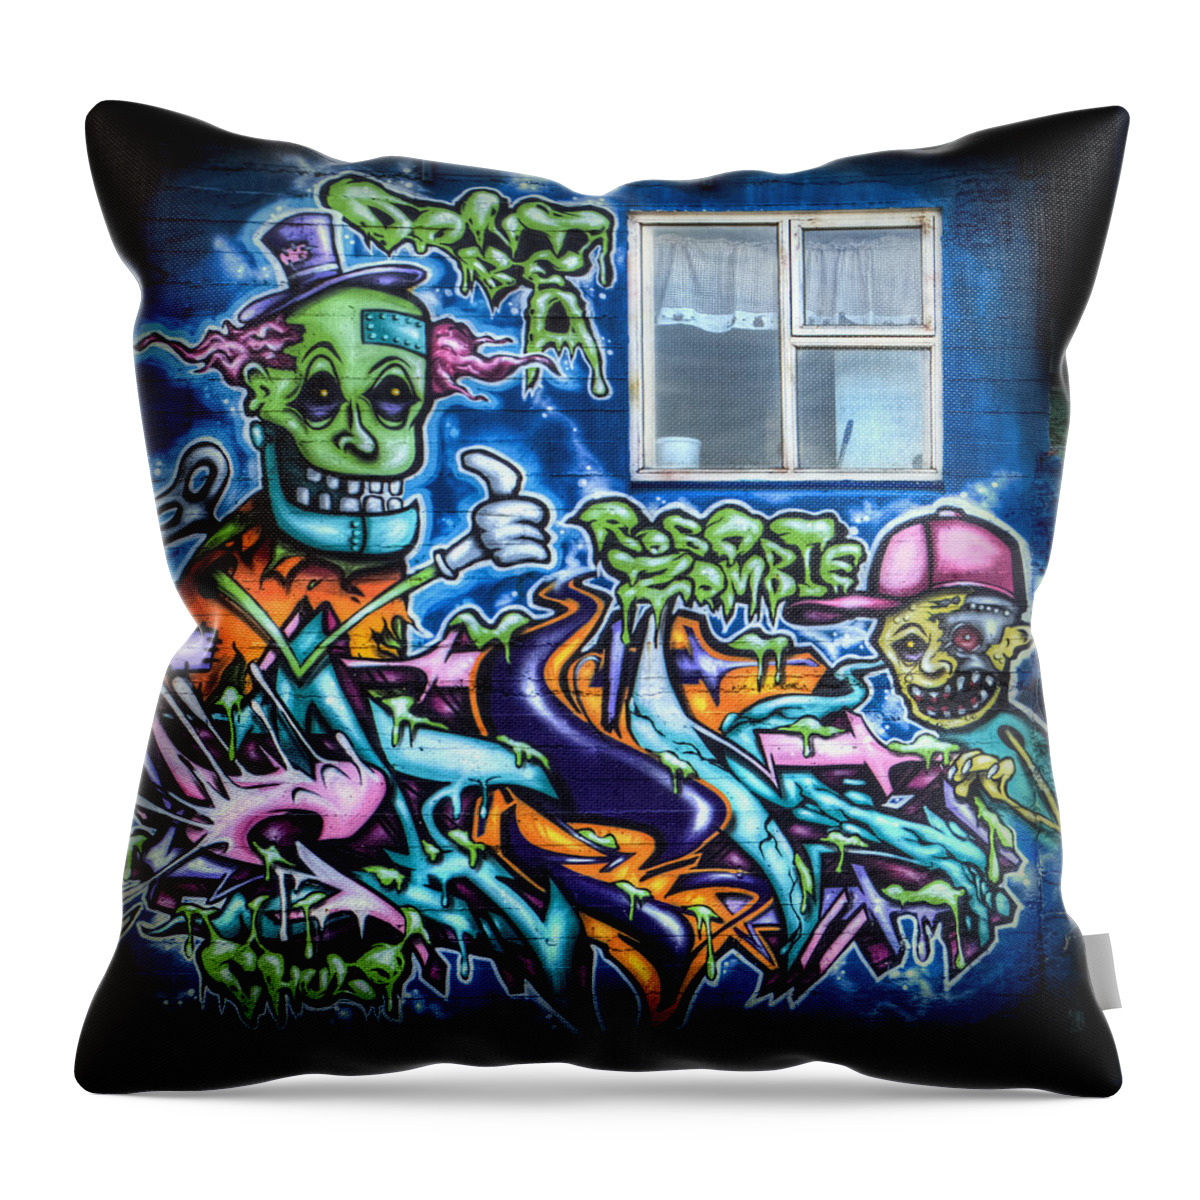 Graffiti Throw Pillow featuring the photograph Graffiti City by Evelina Kremsdorf